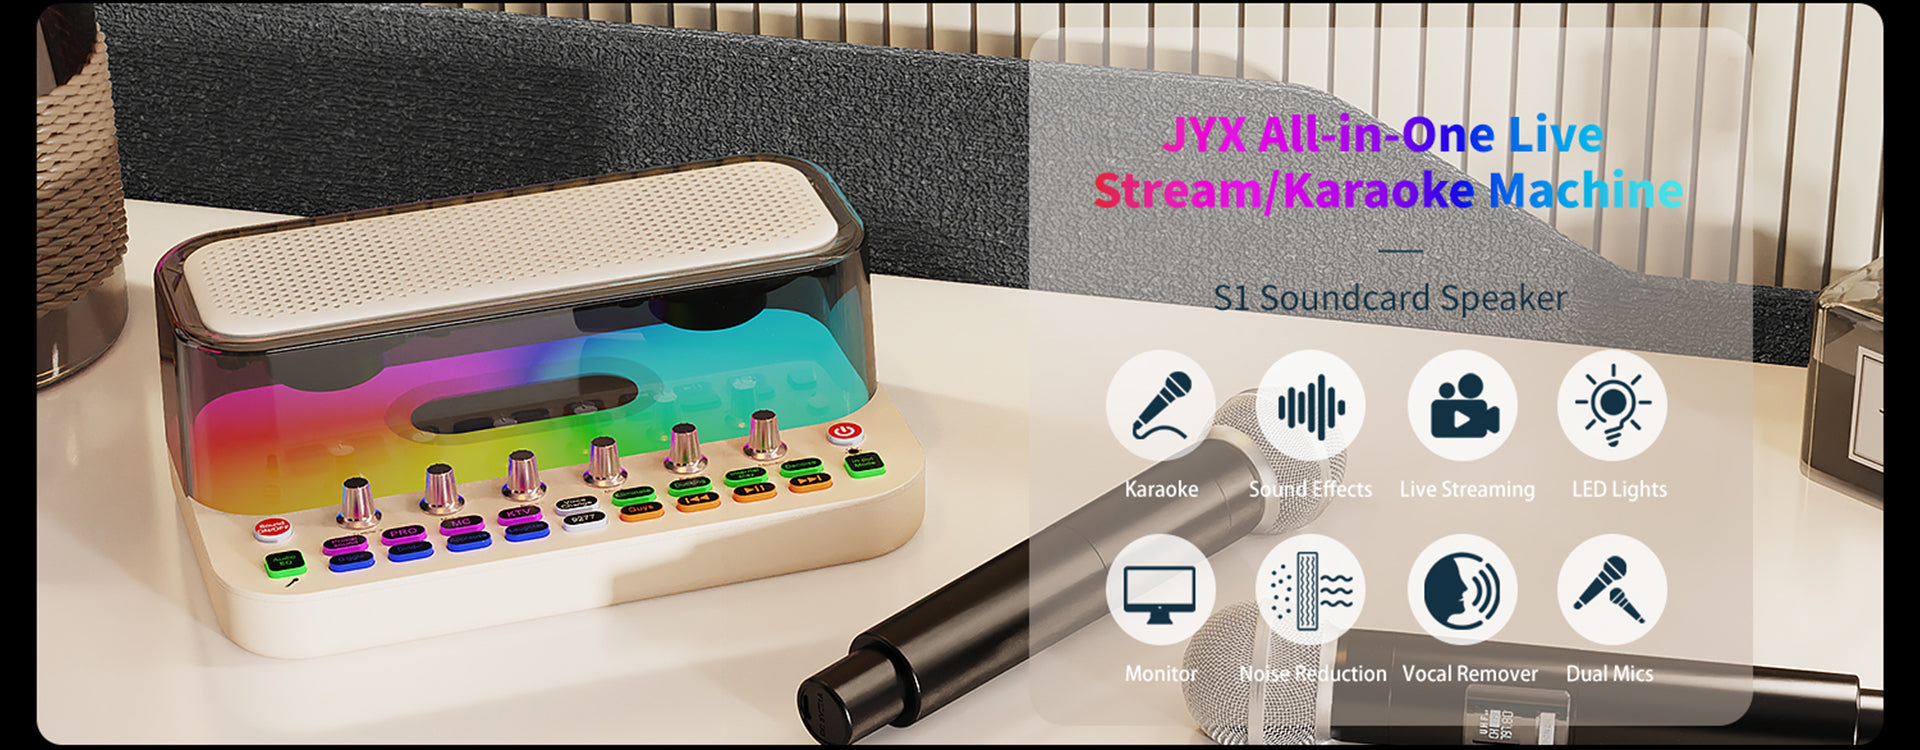 JYX S1 karaoke machine with wireless speaker, LED lights, monitor, noise reduction, dual mics.